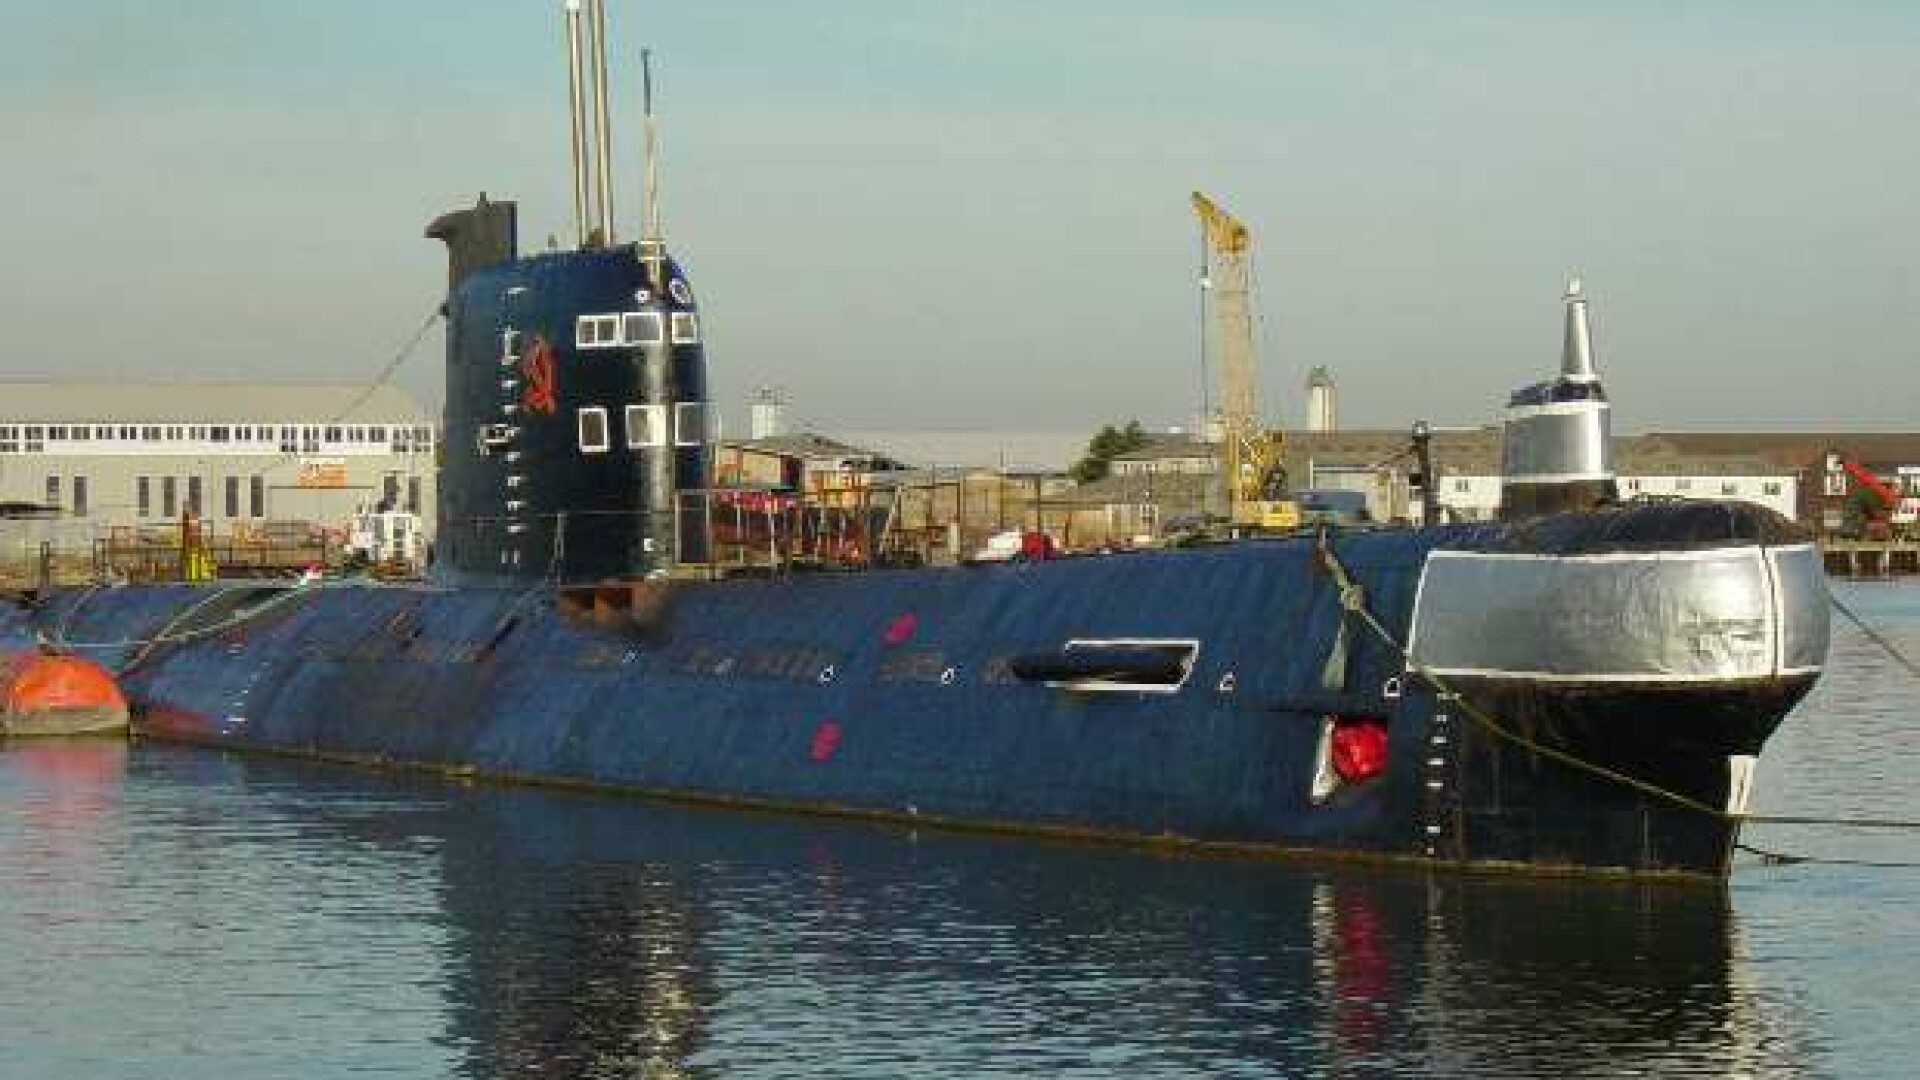 submarin rusesc